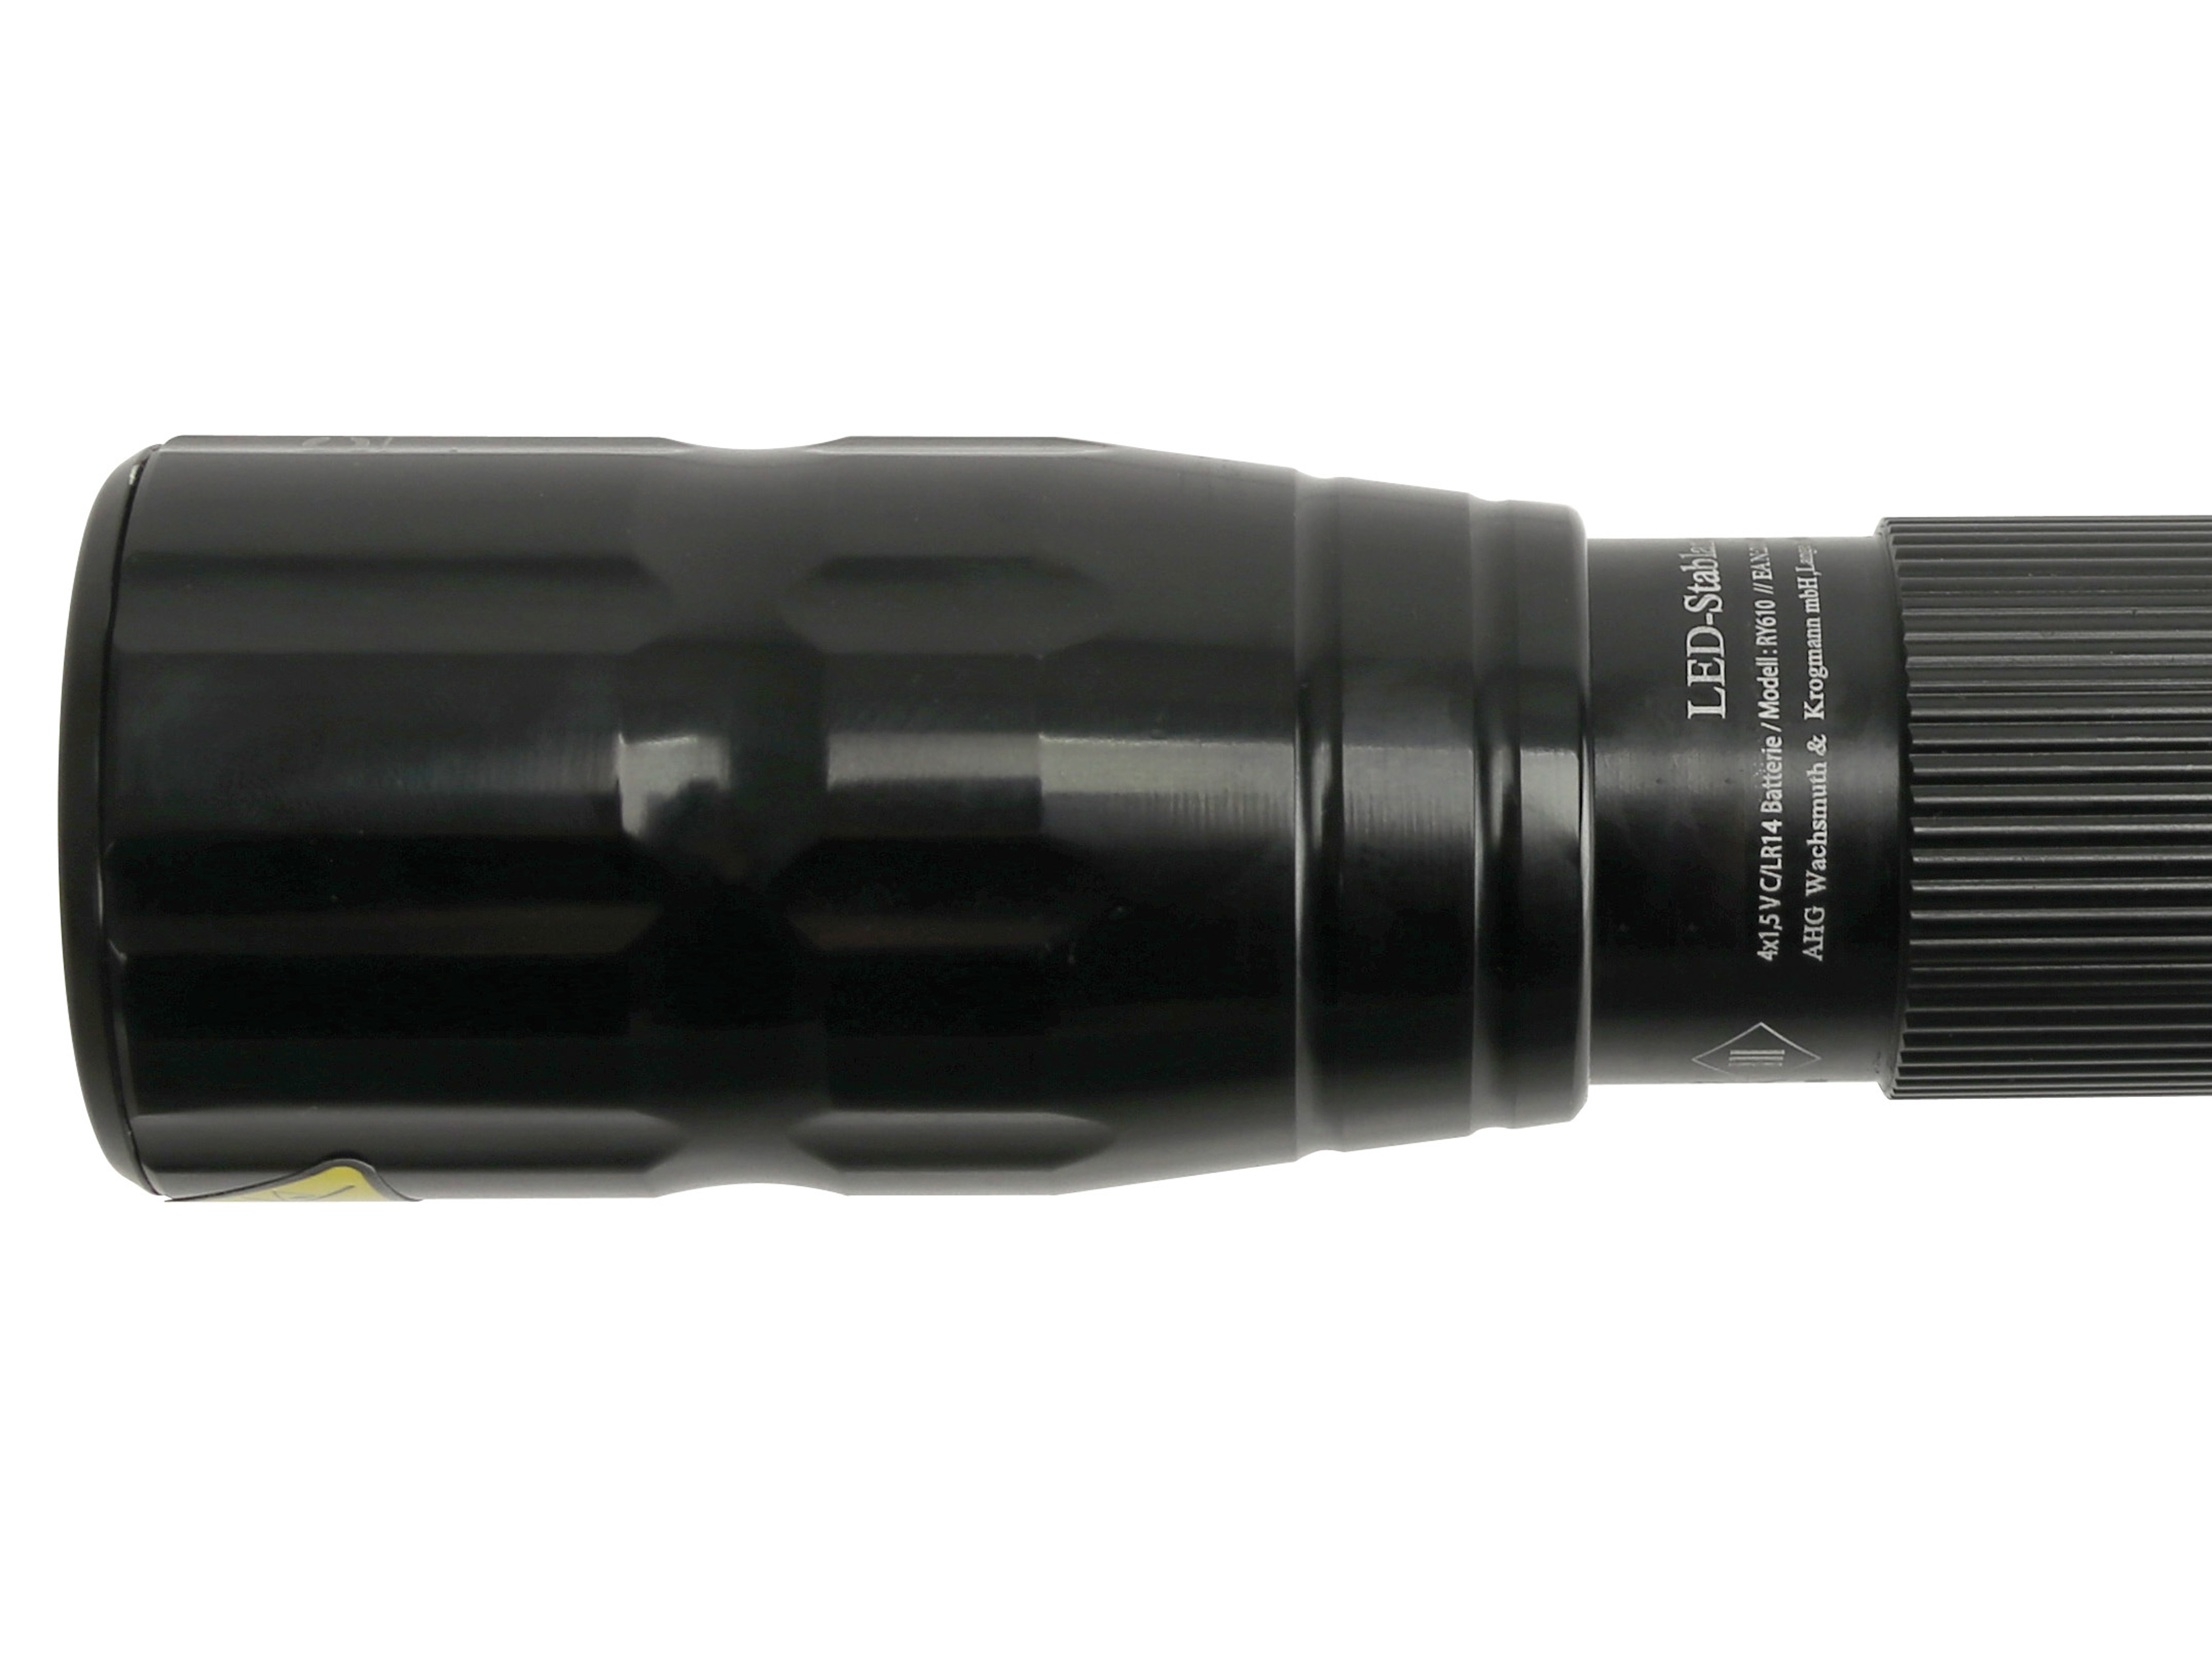 LED-Stablampe, RY610, 1200 lm, schwarz